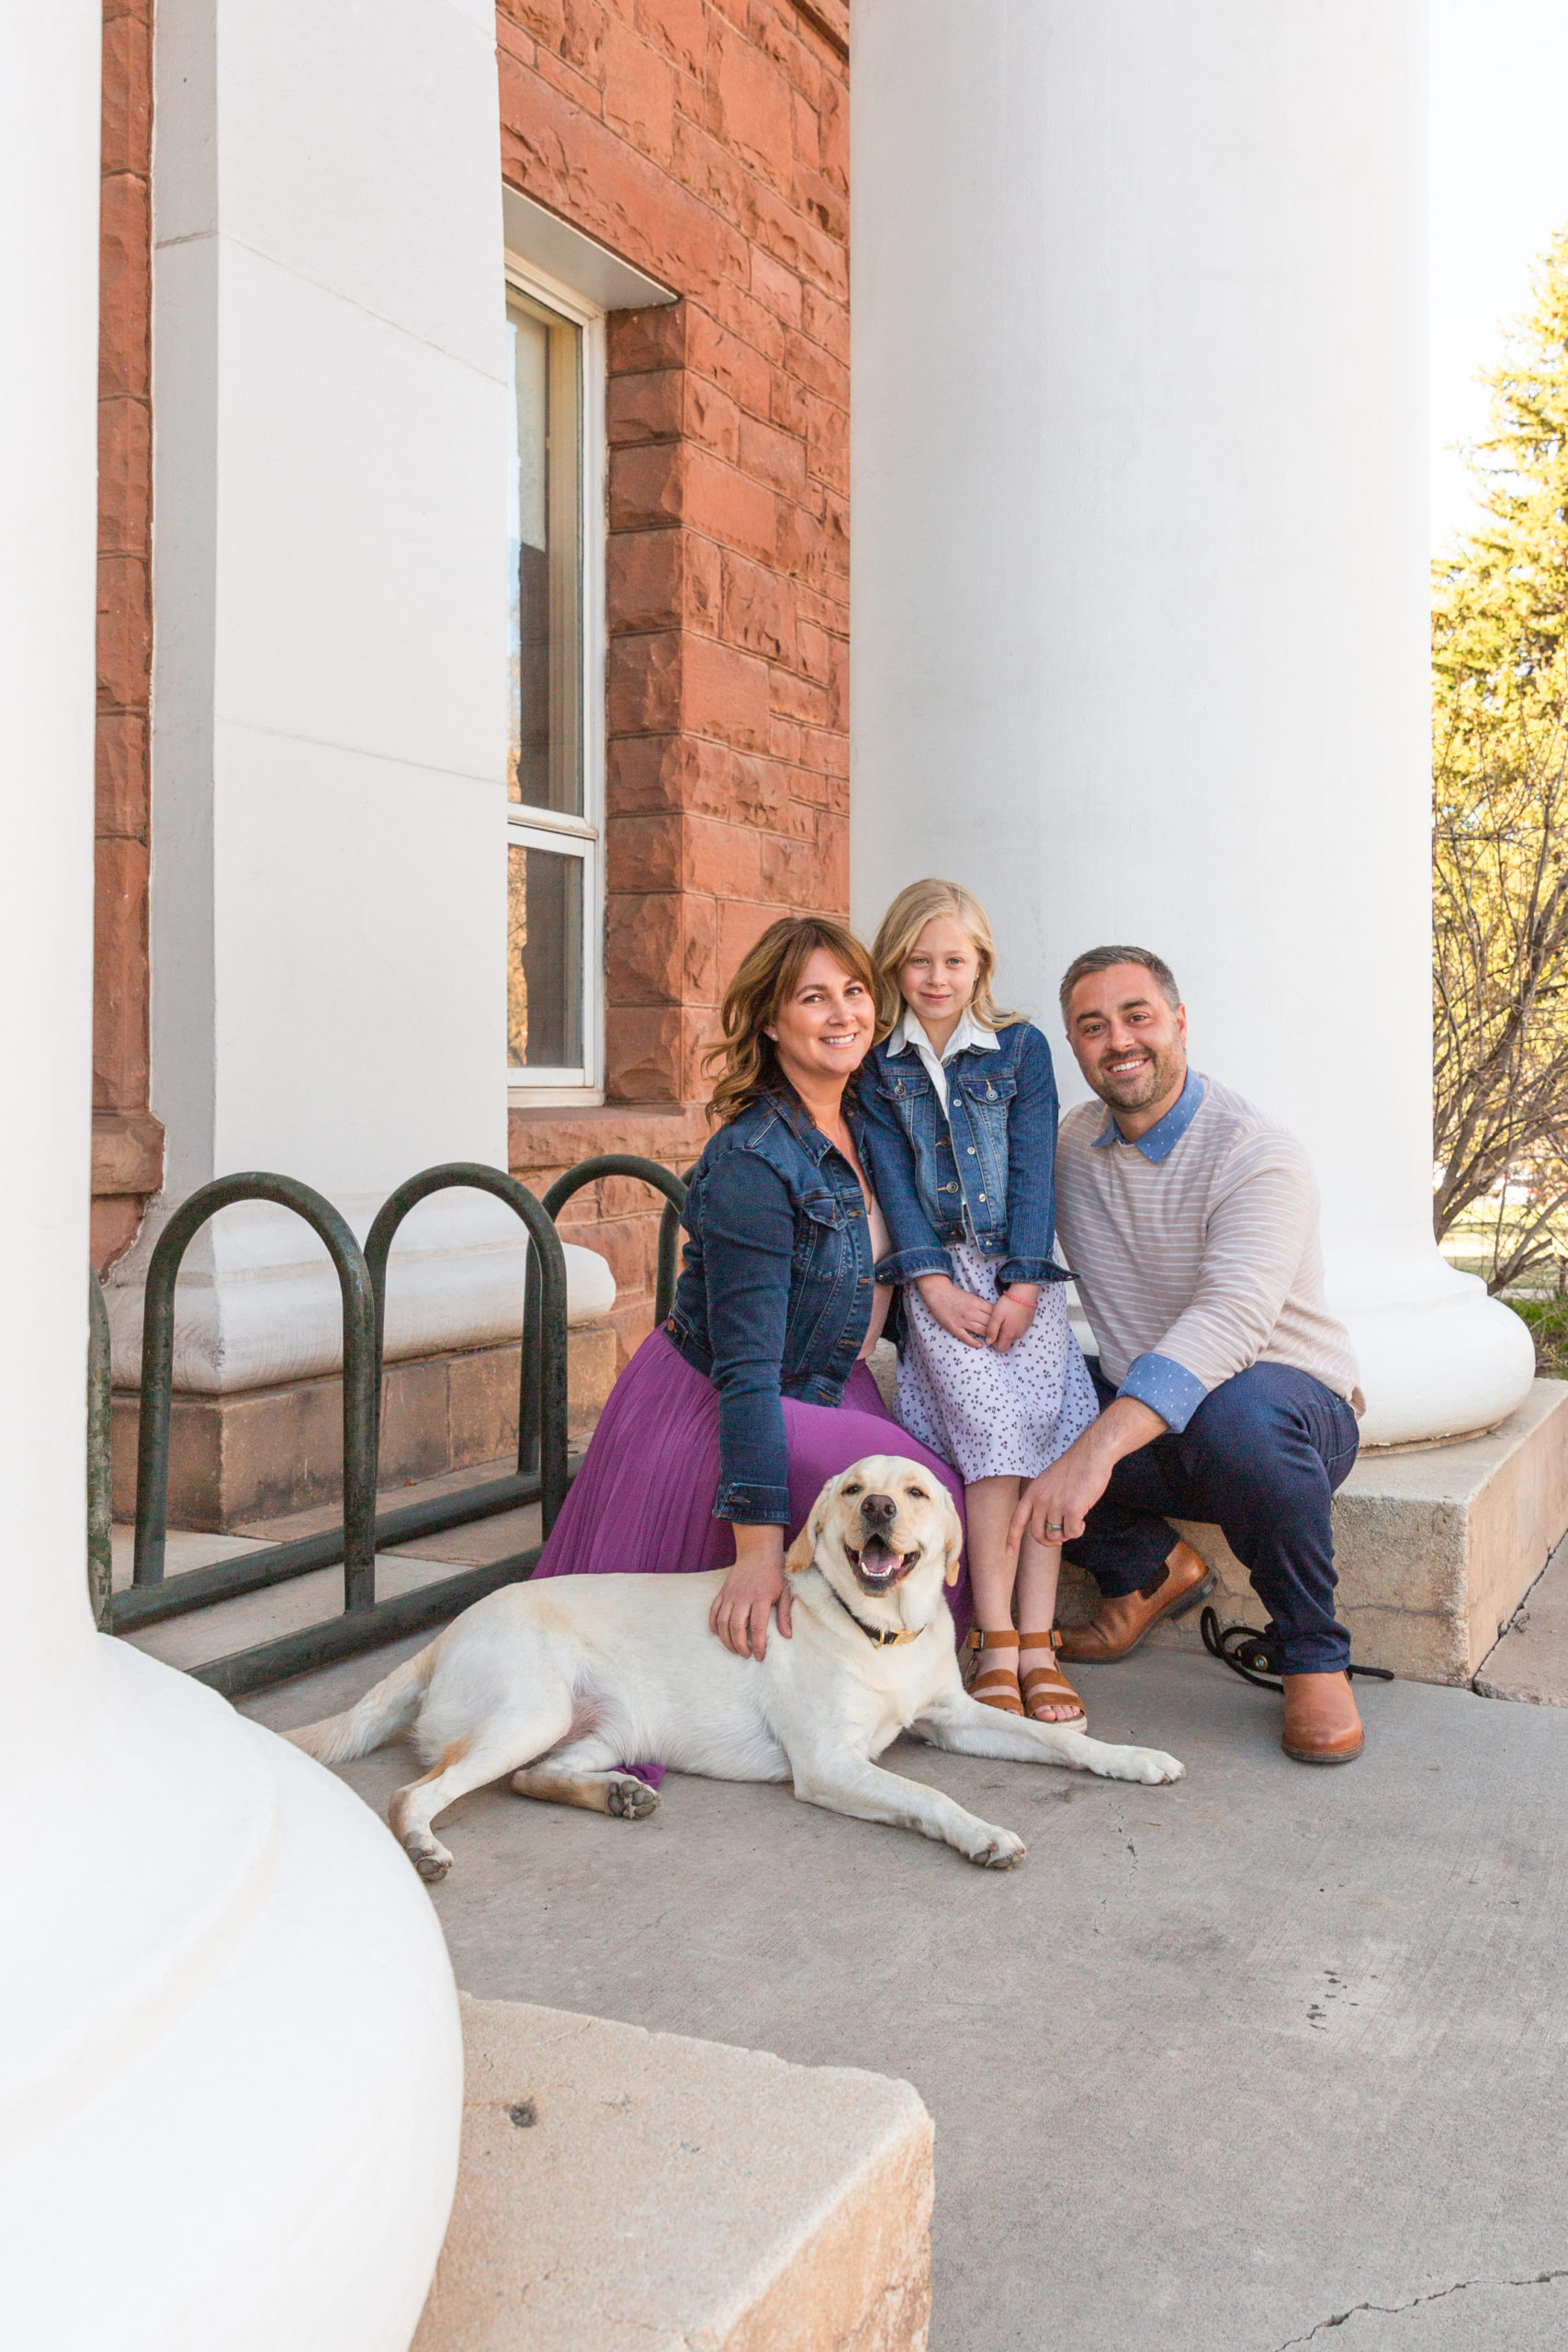 Marmor family portrait session with Bayley Jordan at NAU in Flagstaff, Arizona